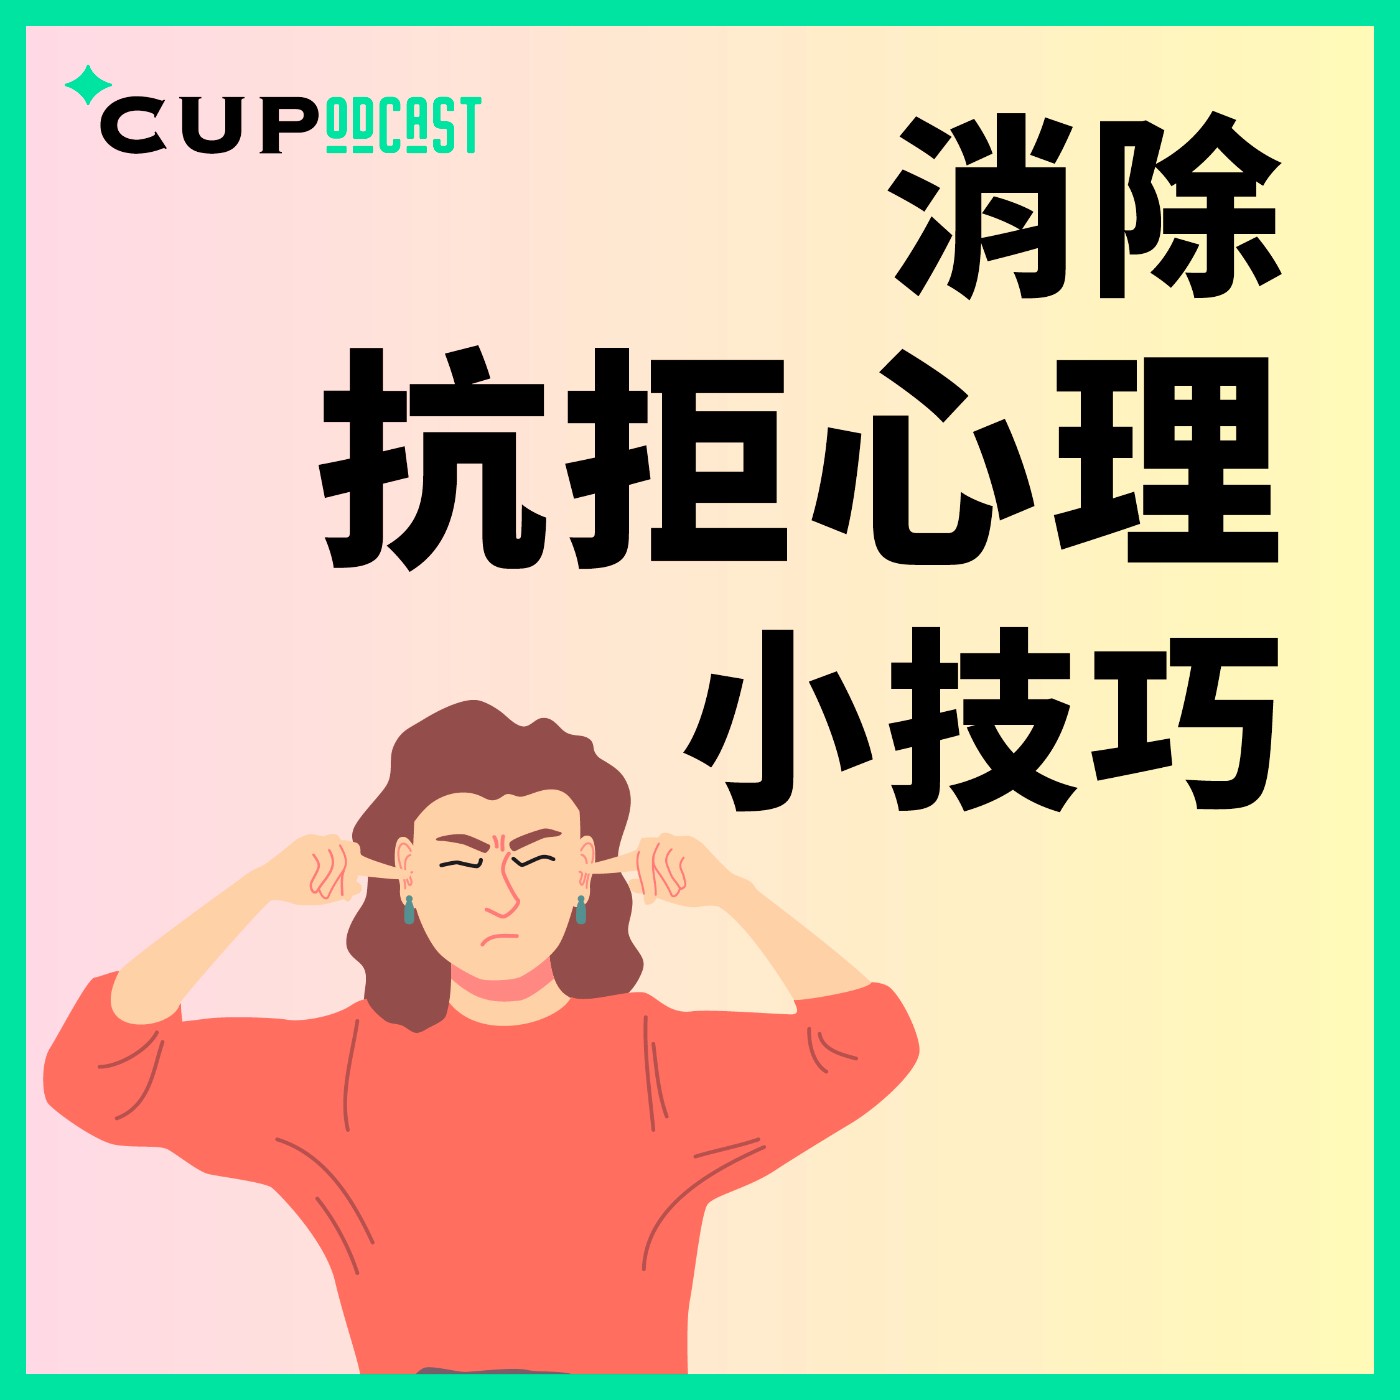 【*CUPodcast】#86 消除抗拒心理小技巧